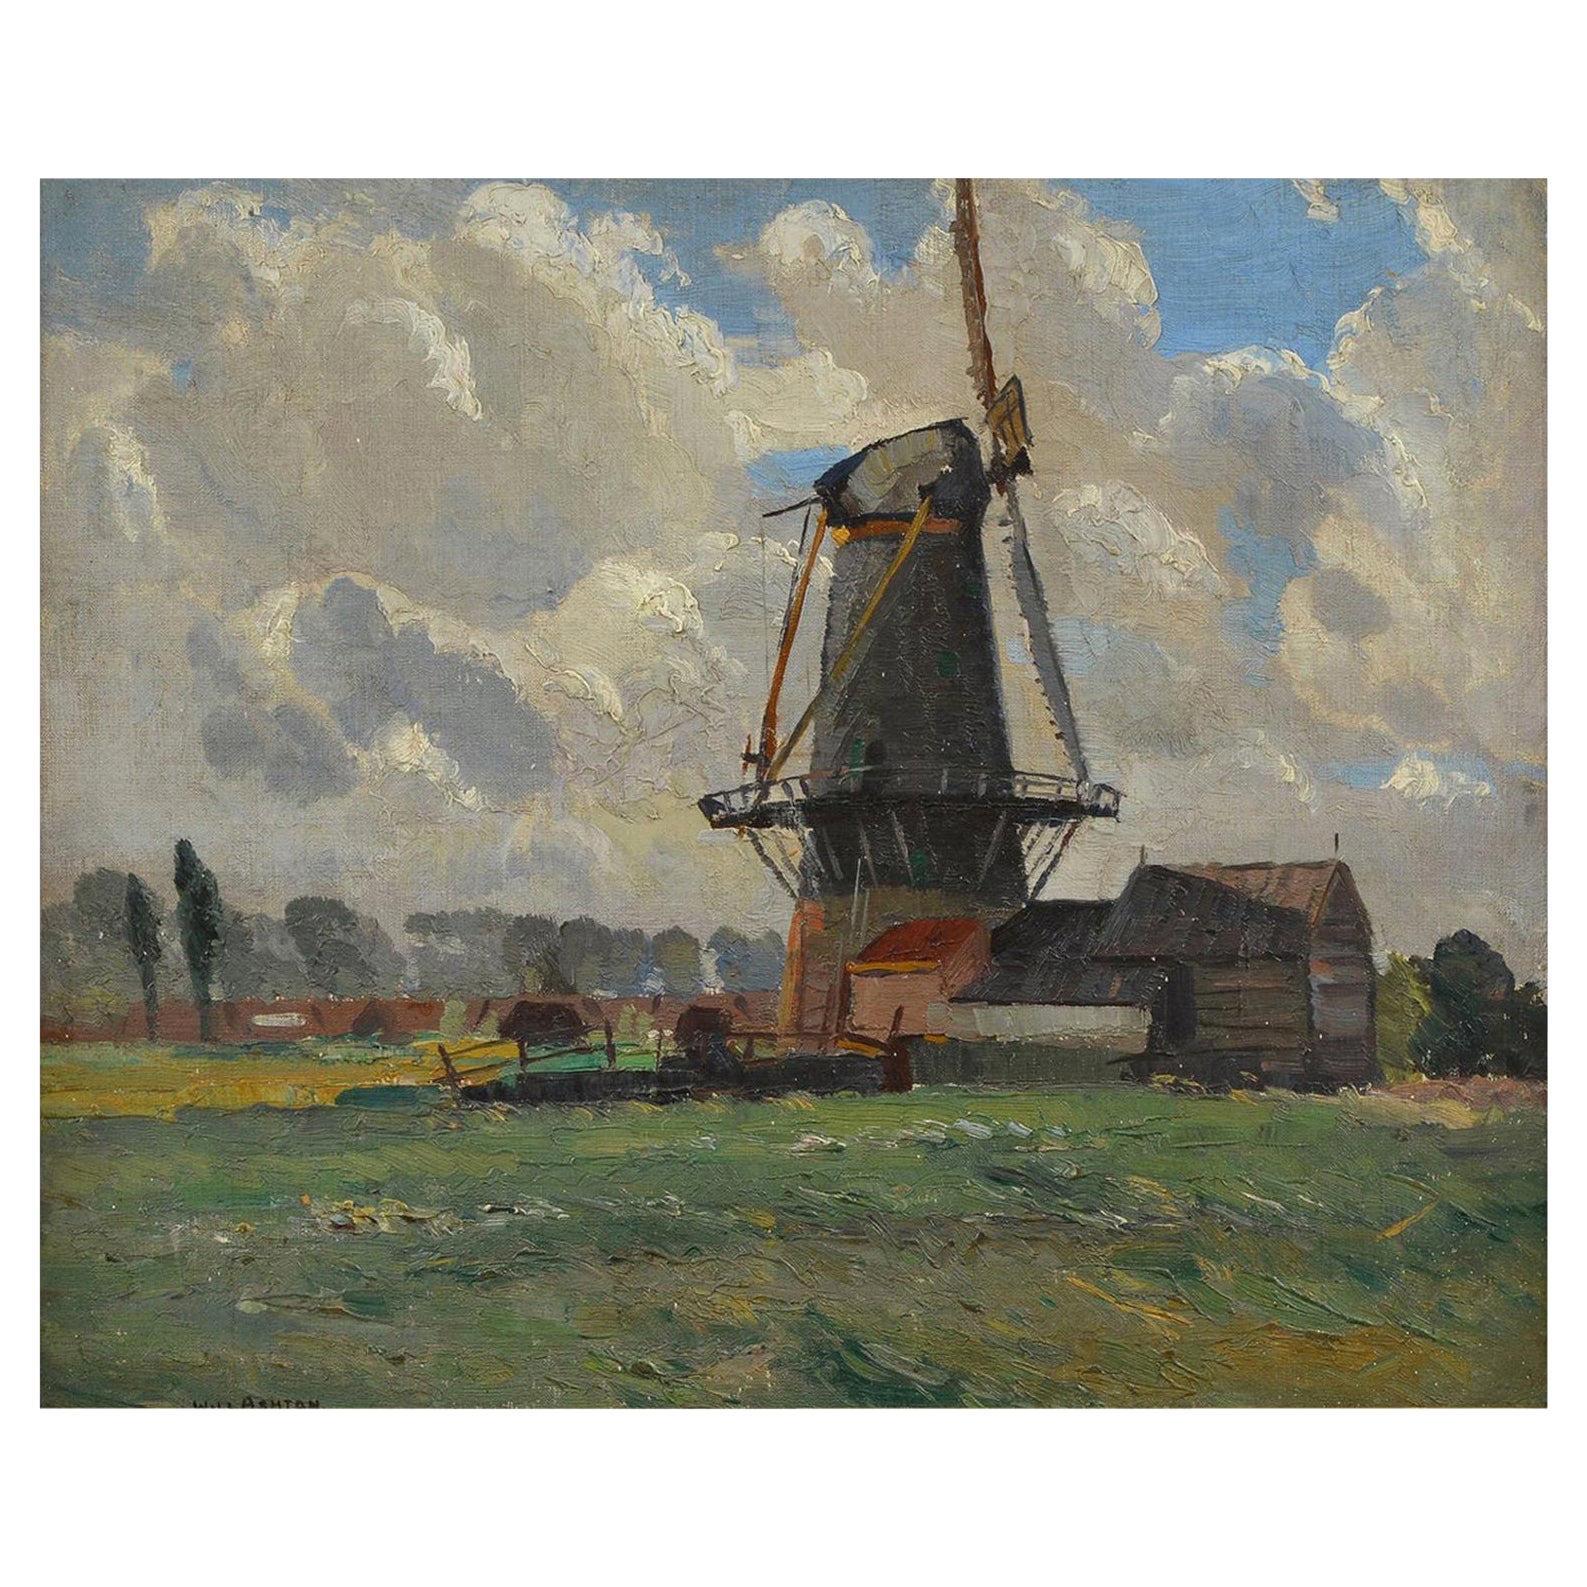 William Ashton, English Windmill, Oil on Canvas, Early 20th Century